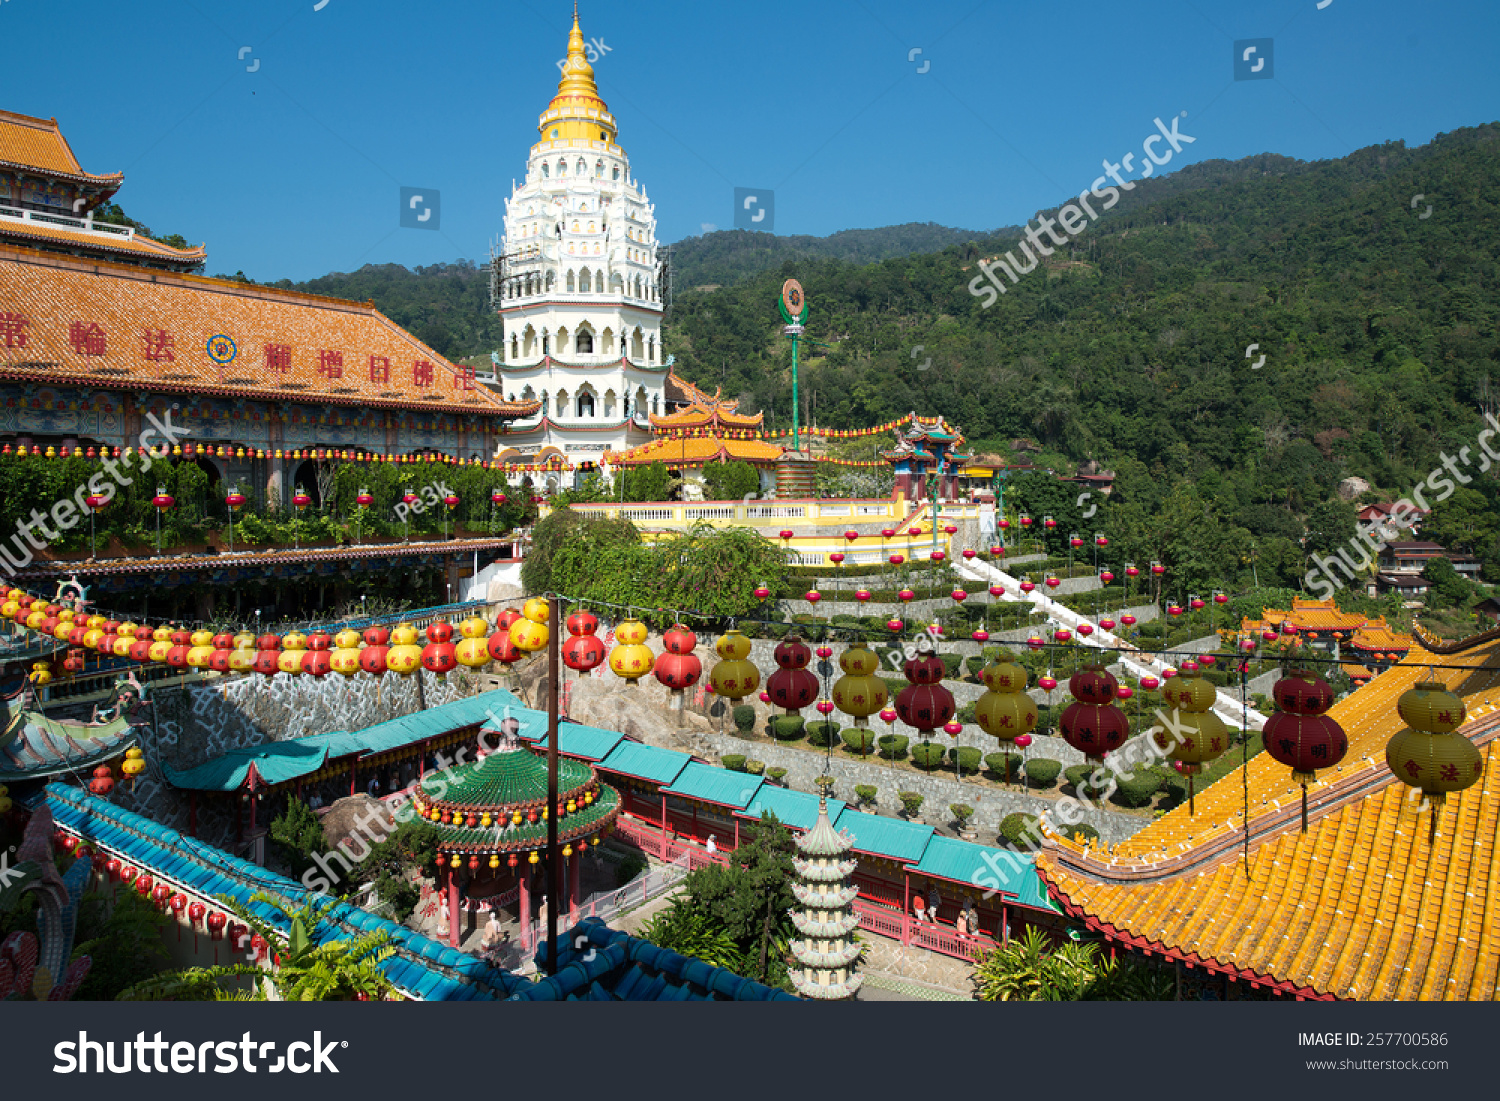 Buddhist temple penang